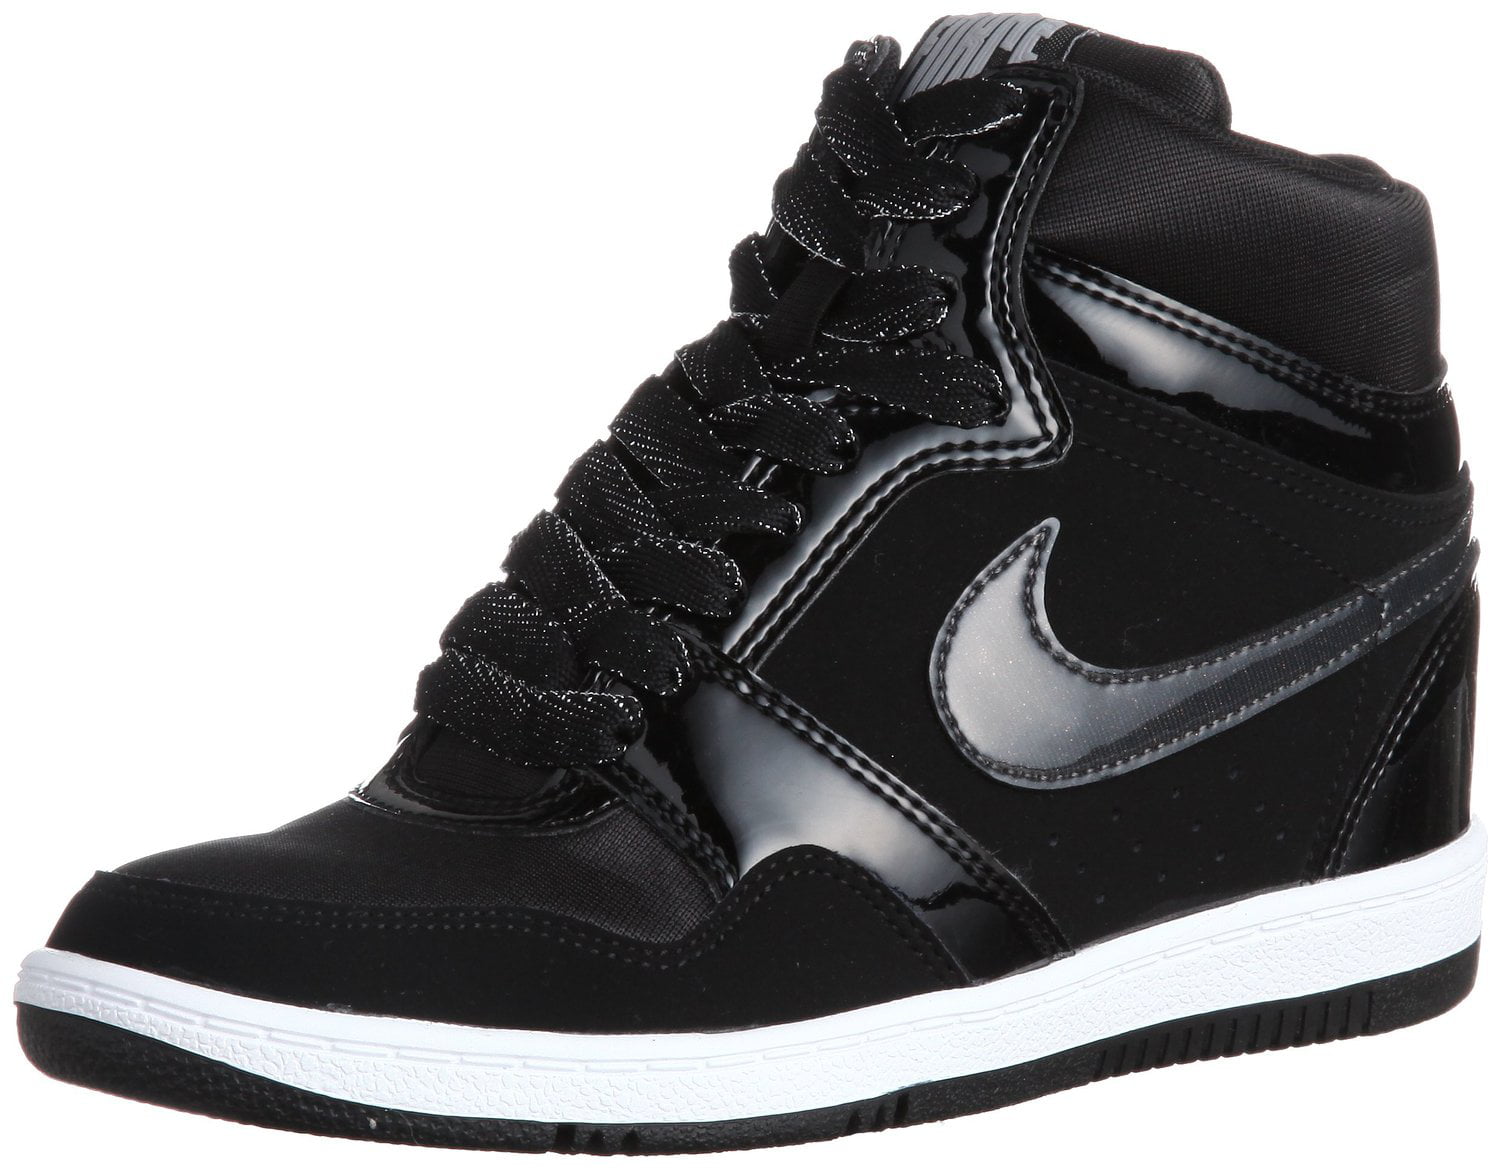 Nike Sky Shoe-Black/Anthracite - Walmart.com